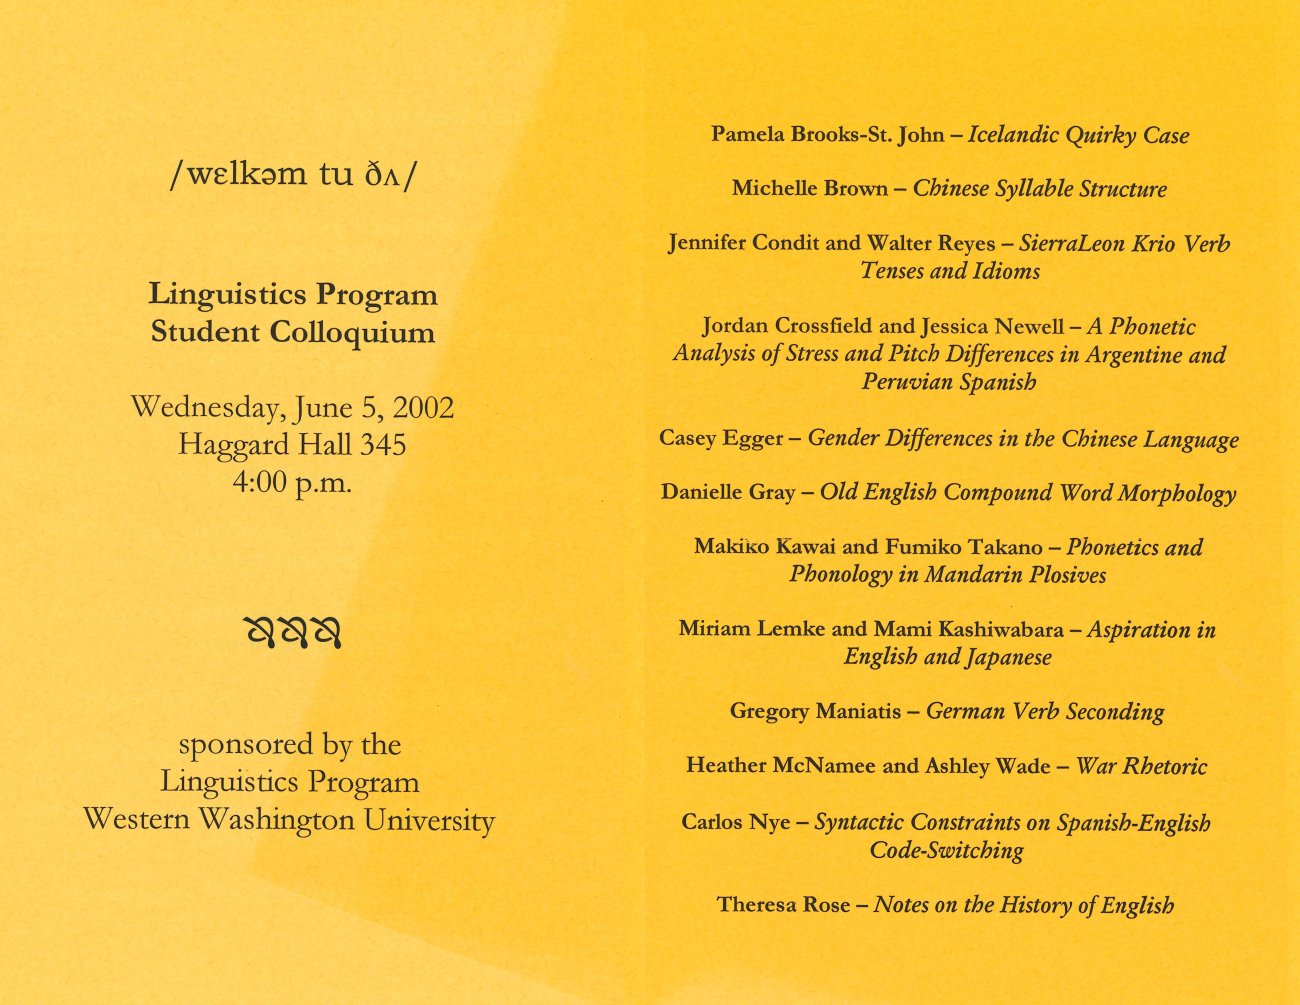 Program for June 5, 2002 Linguistics Program Student Colloquium. See webpage for details.